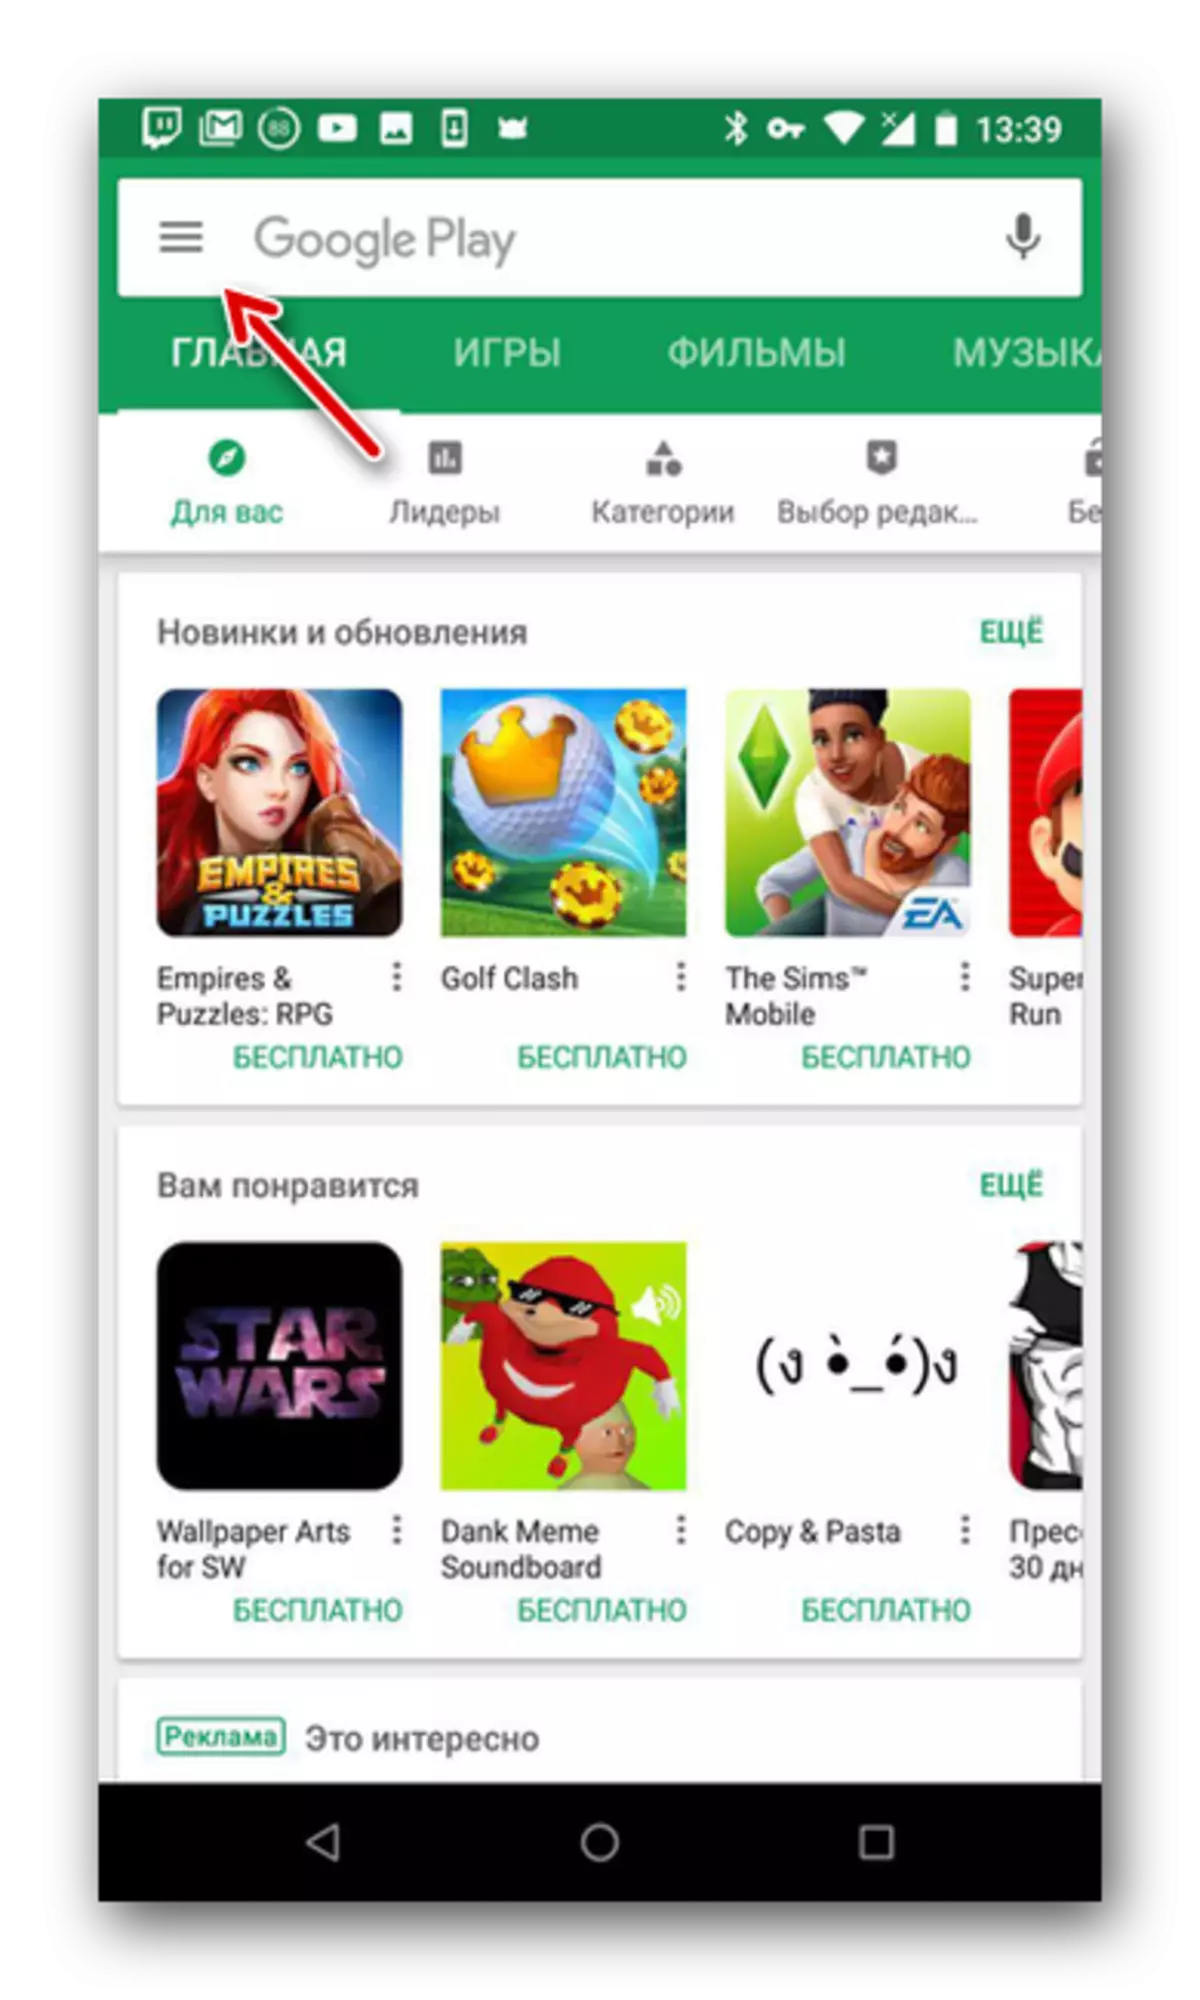 منوی بازار Google Play